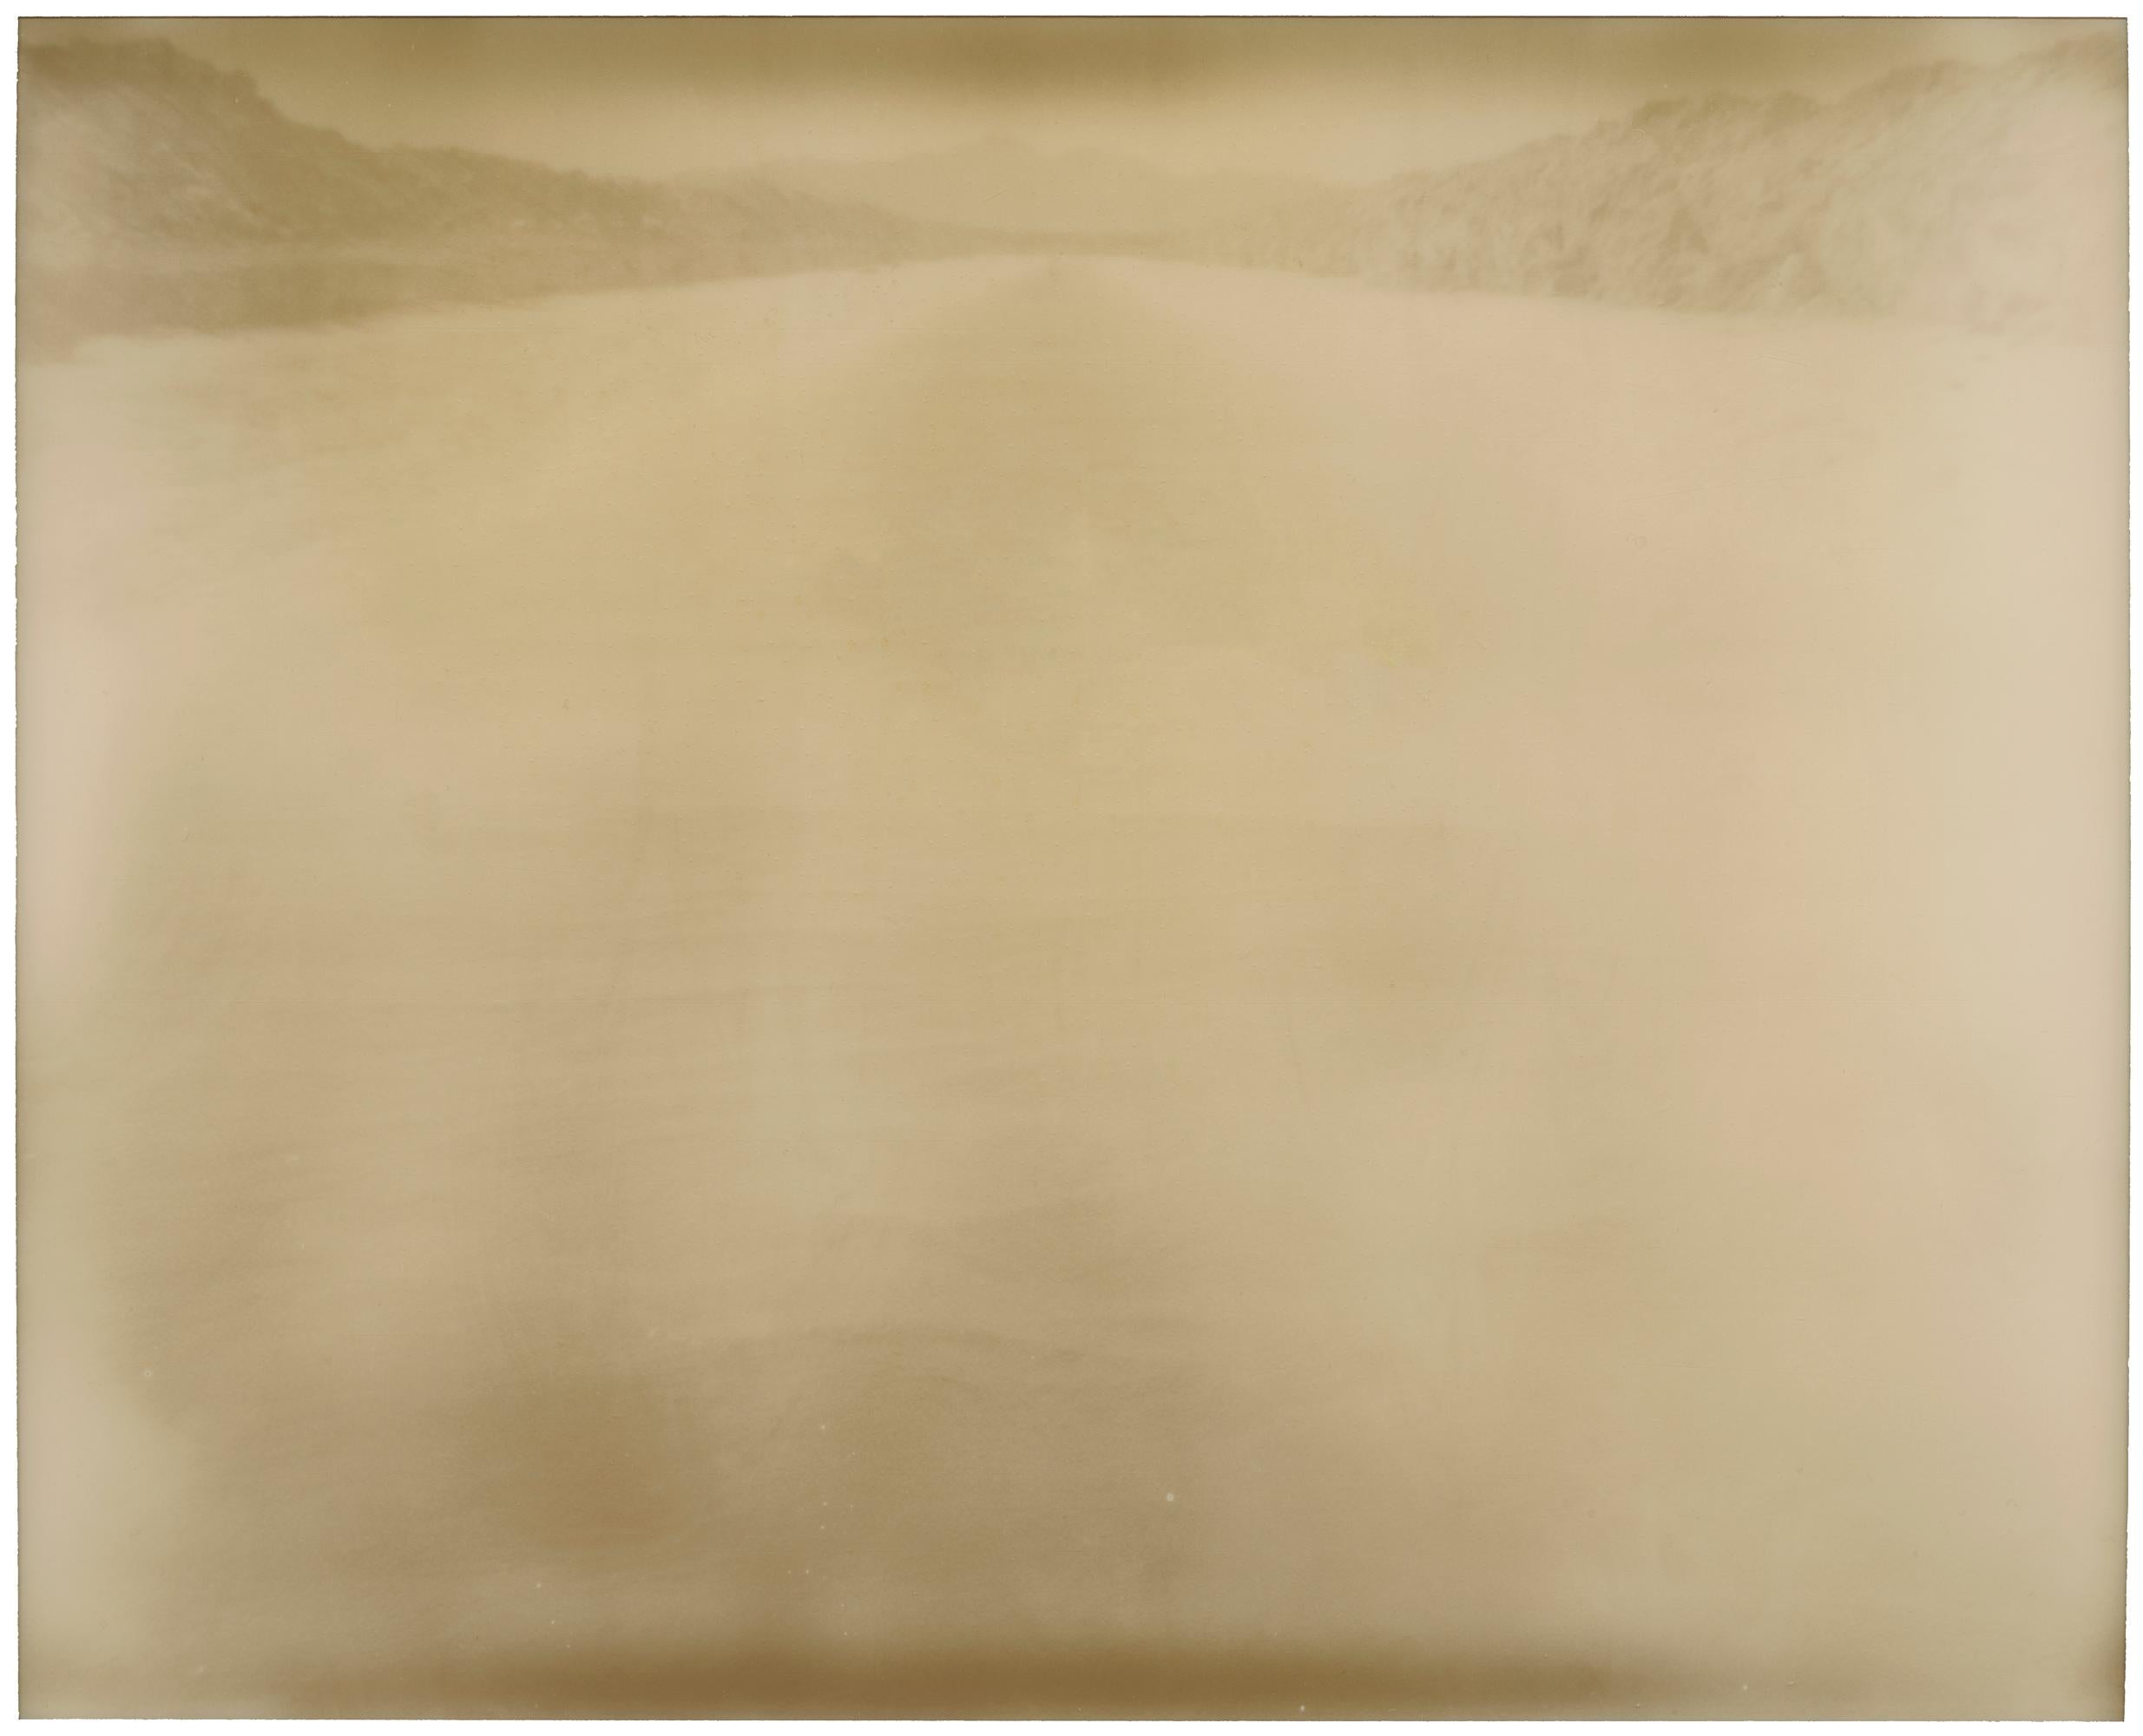 Stefanie Schneider Black and White Photograph - Forgotten Land (California Badlands) - Contemporary, Polaroid, Landscape